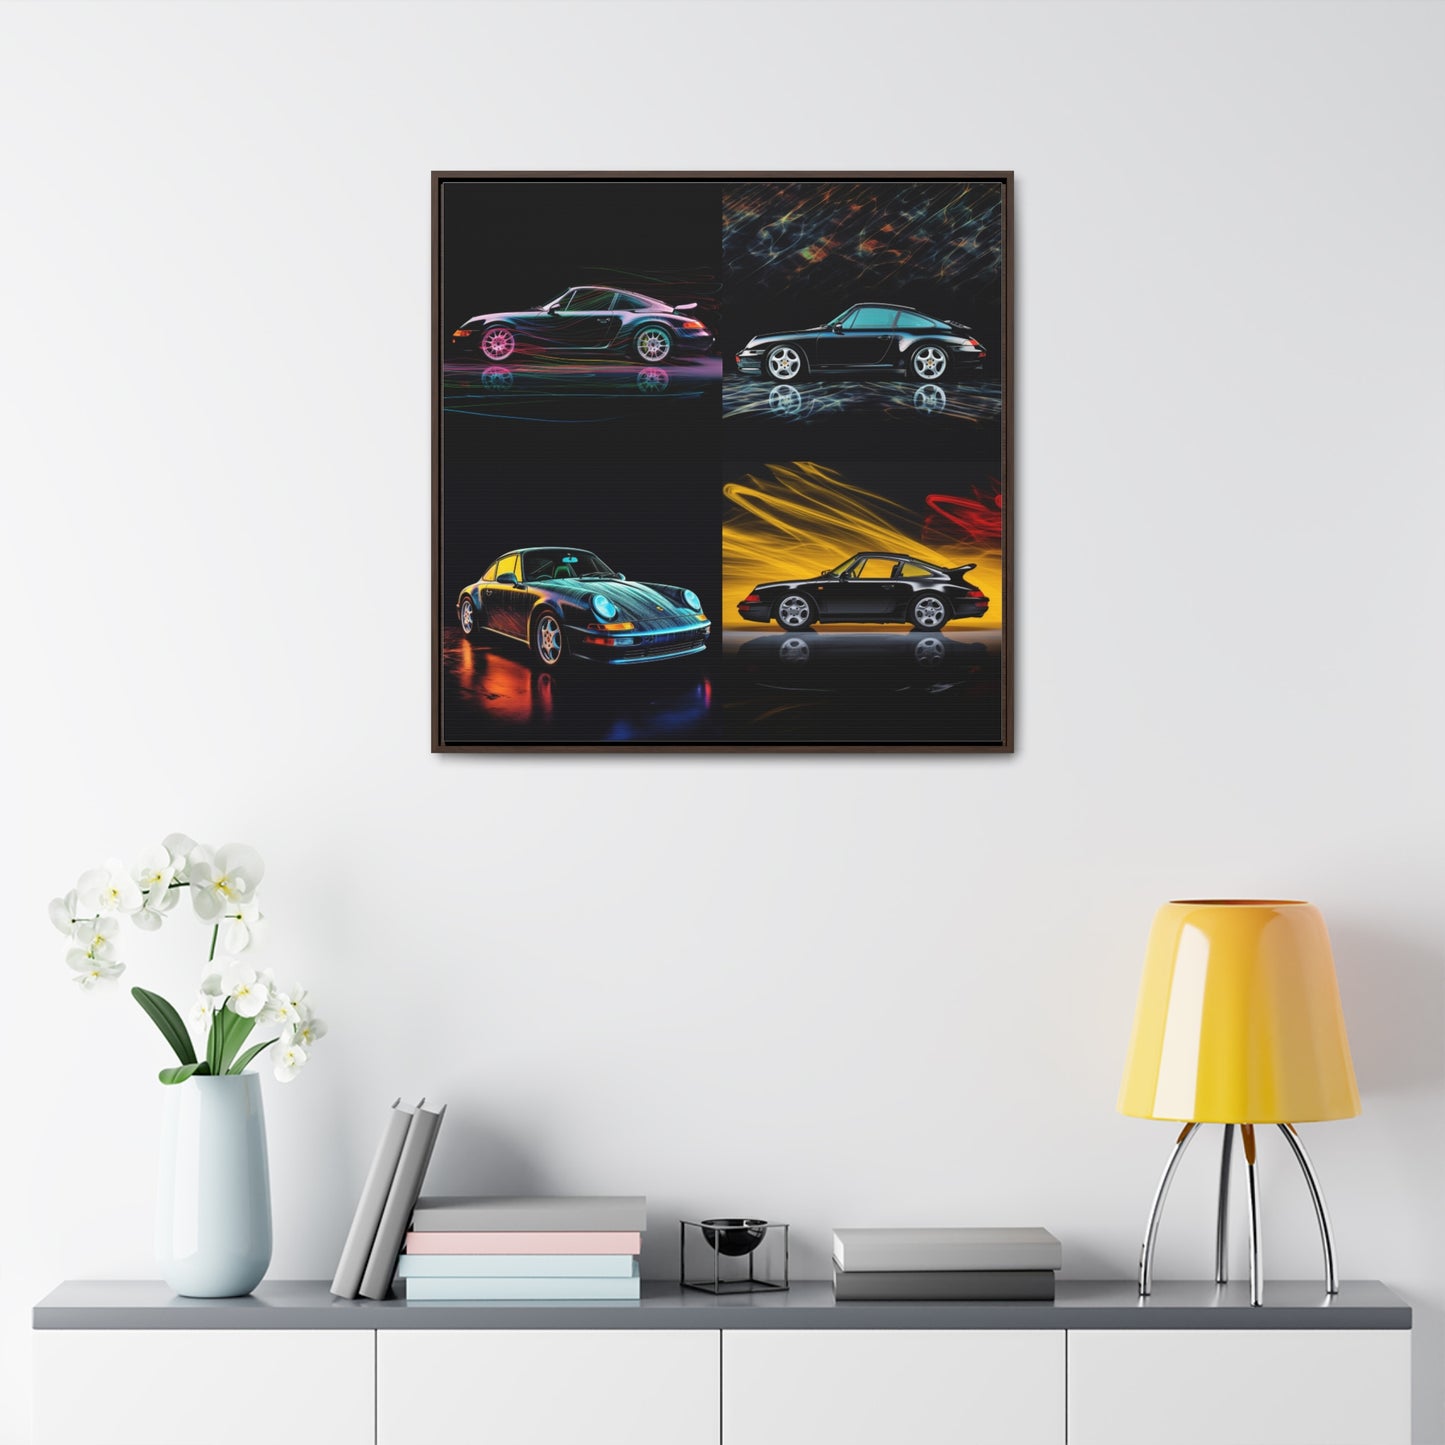 Gallery Canvas Wraps, Square Frame Porsche 933 5